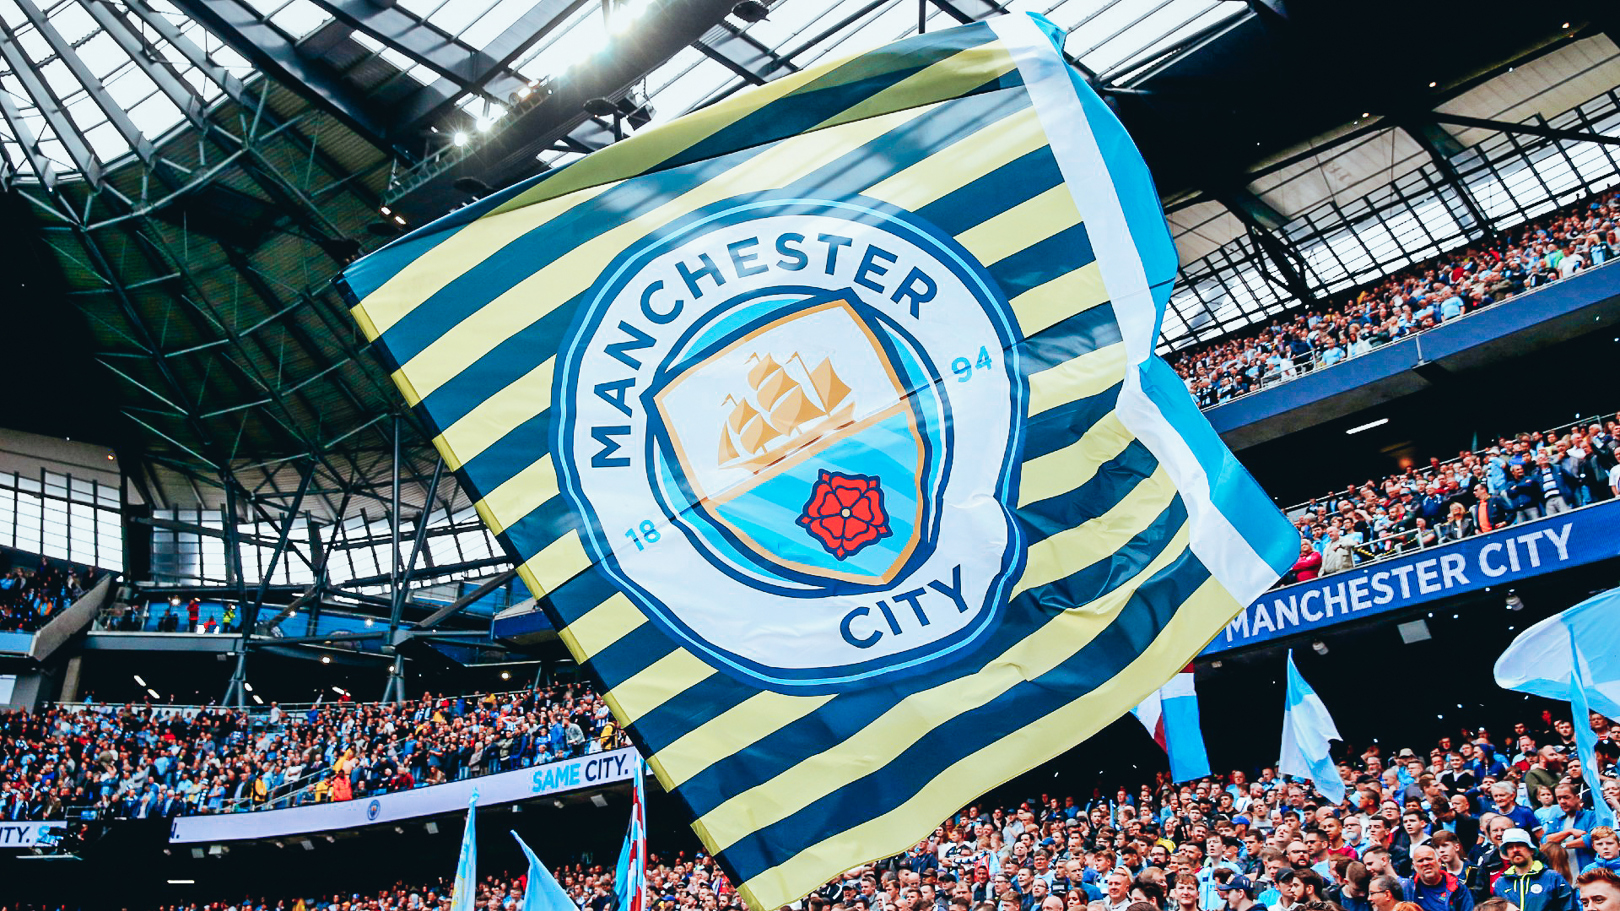 15 MCFC Manchester City Fans ideas